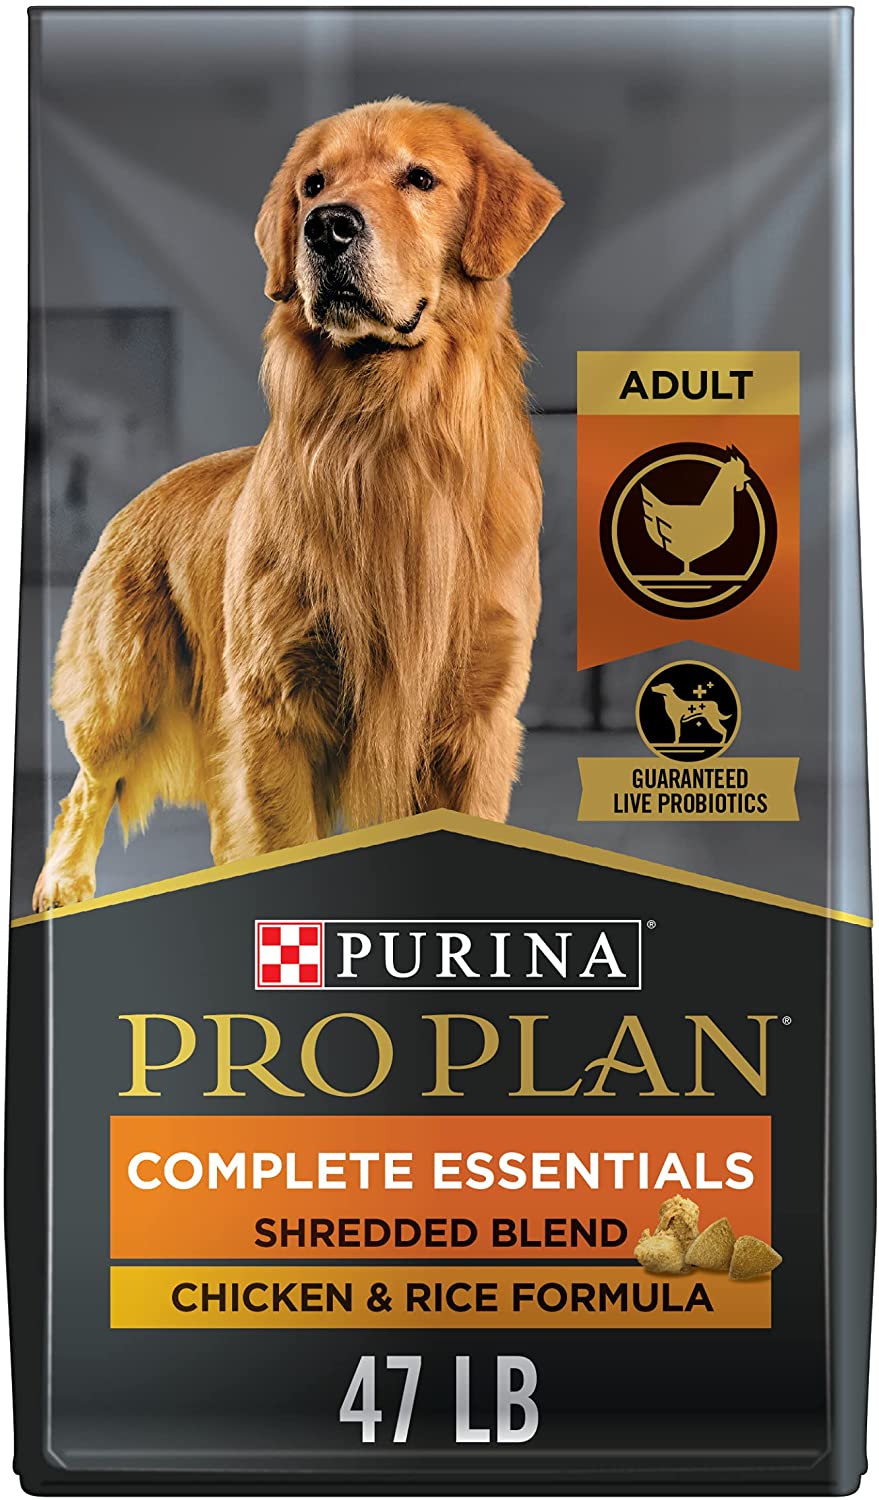 Purina-Pro-Plan-Adult-Dog-Food